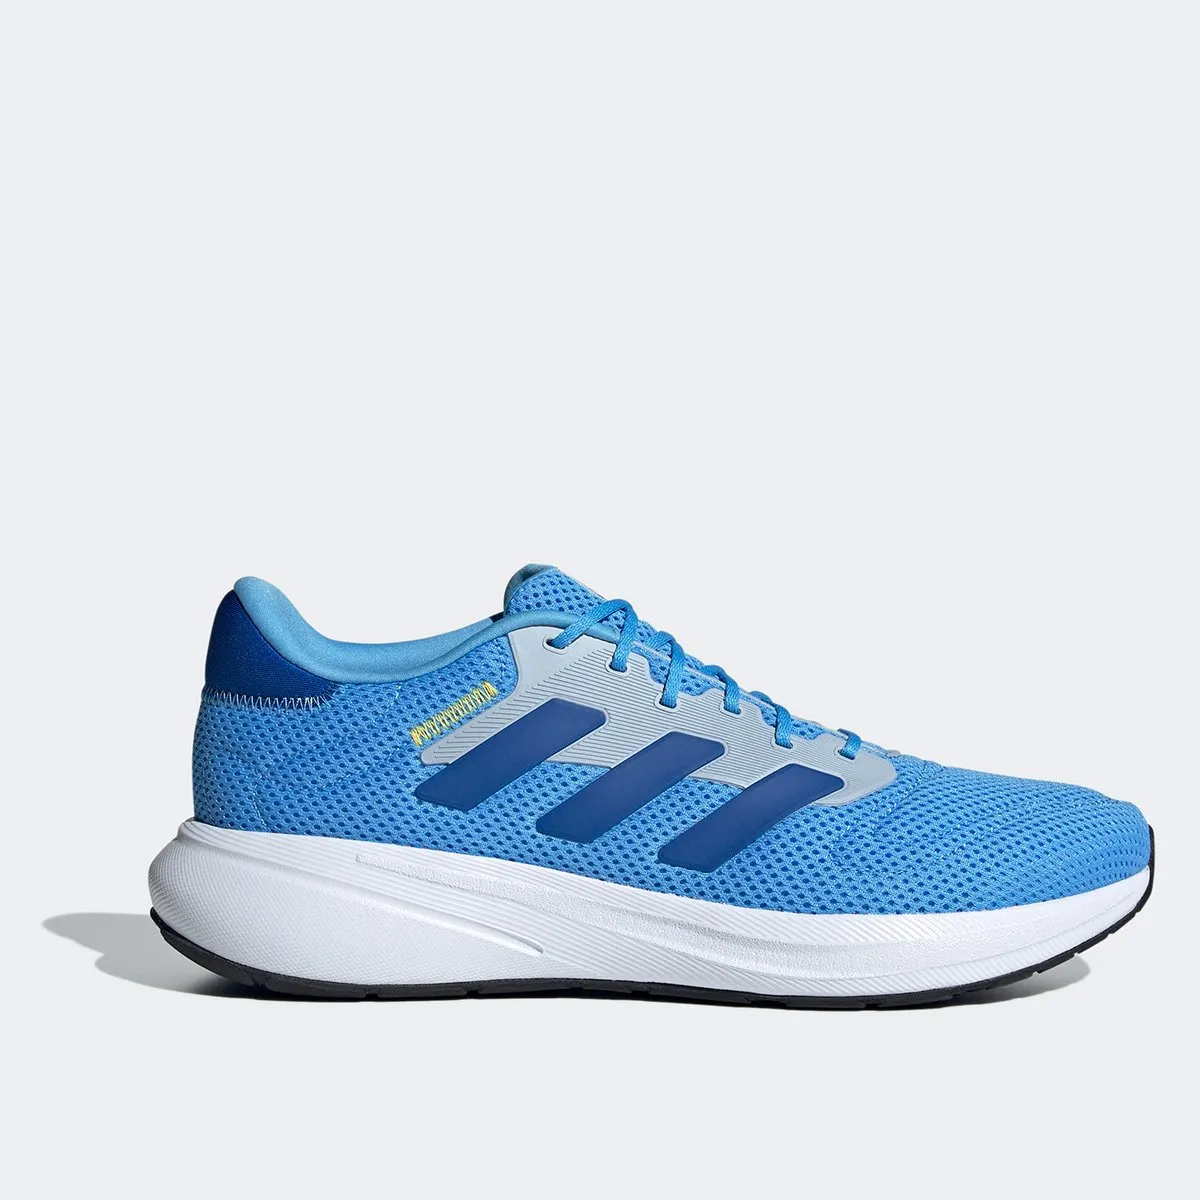 [App] Tnis Adidas Response Runner - Azul Claro